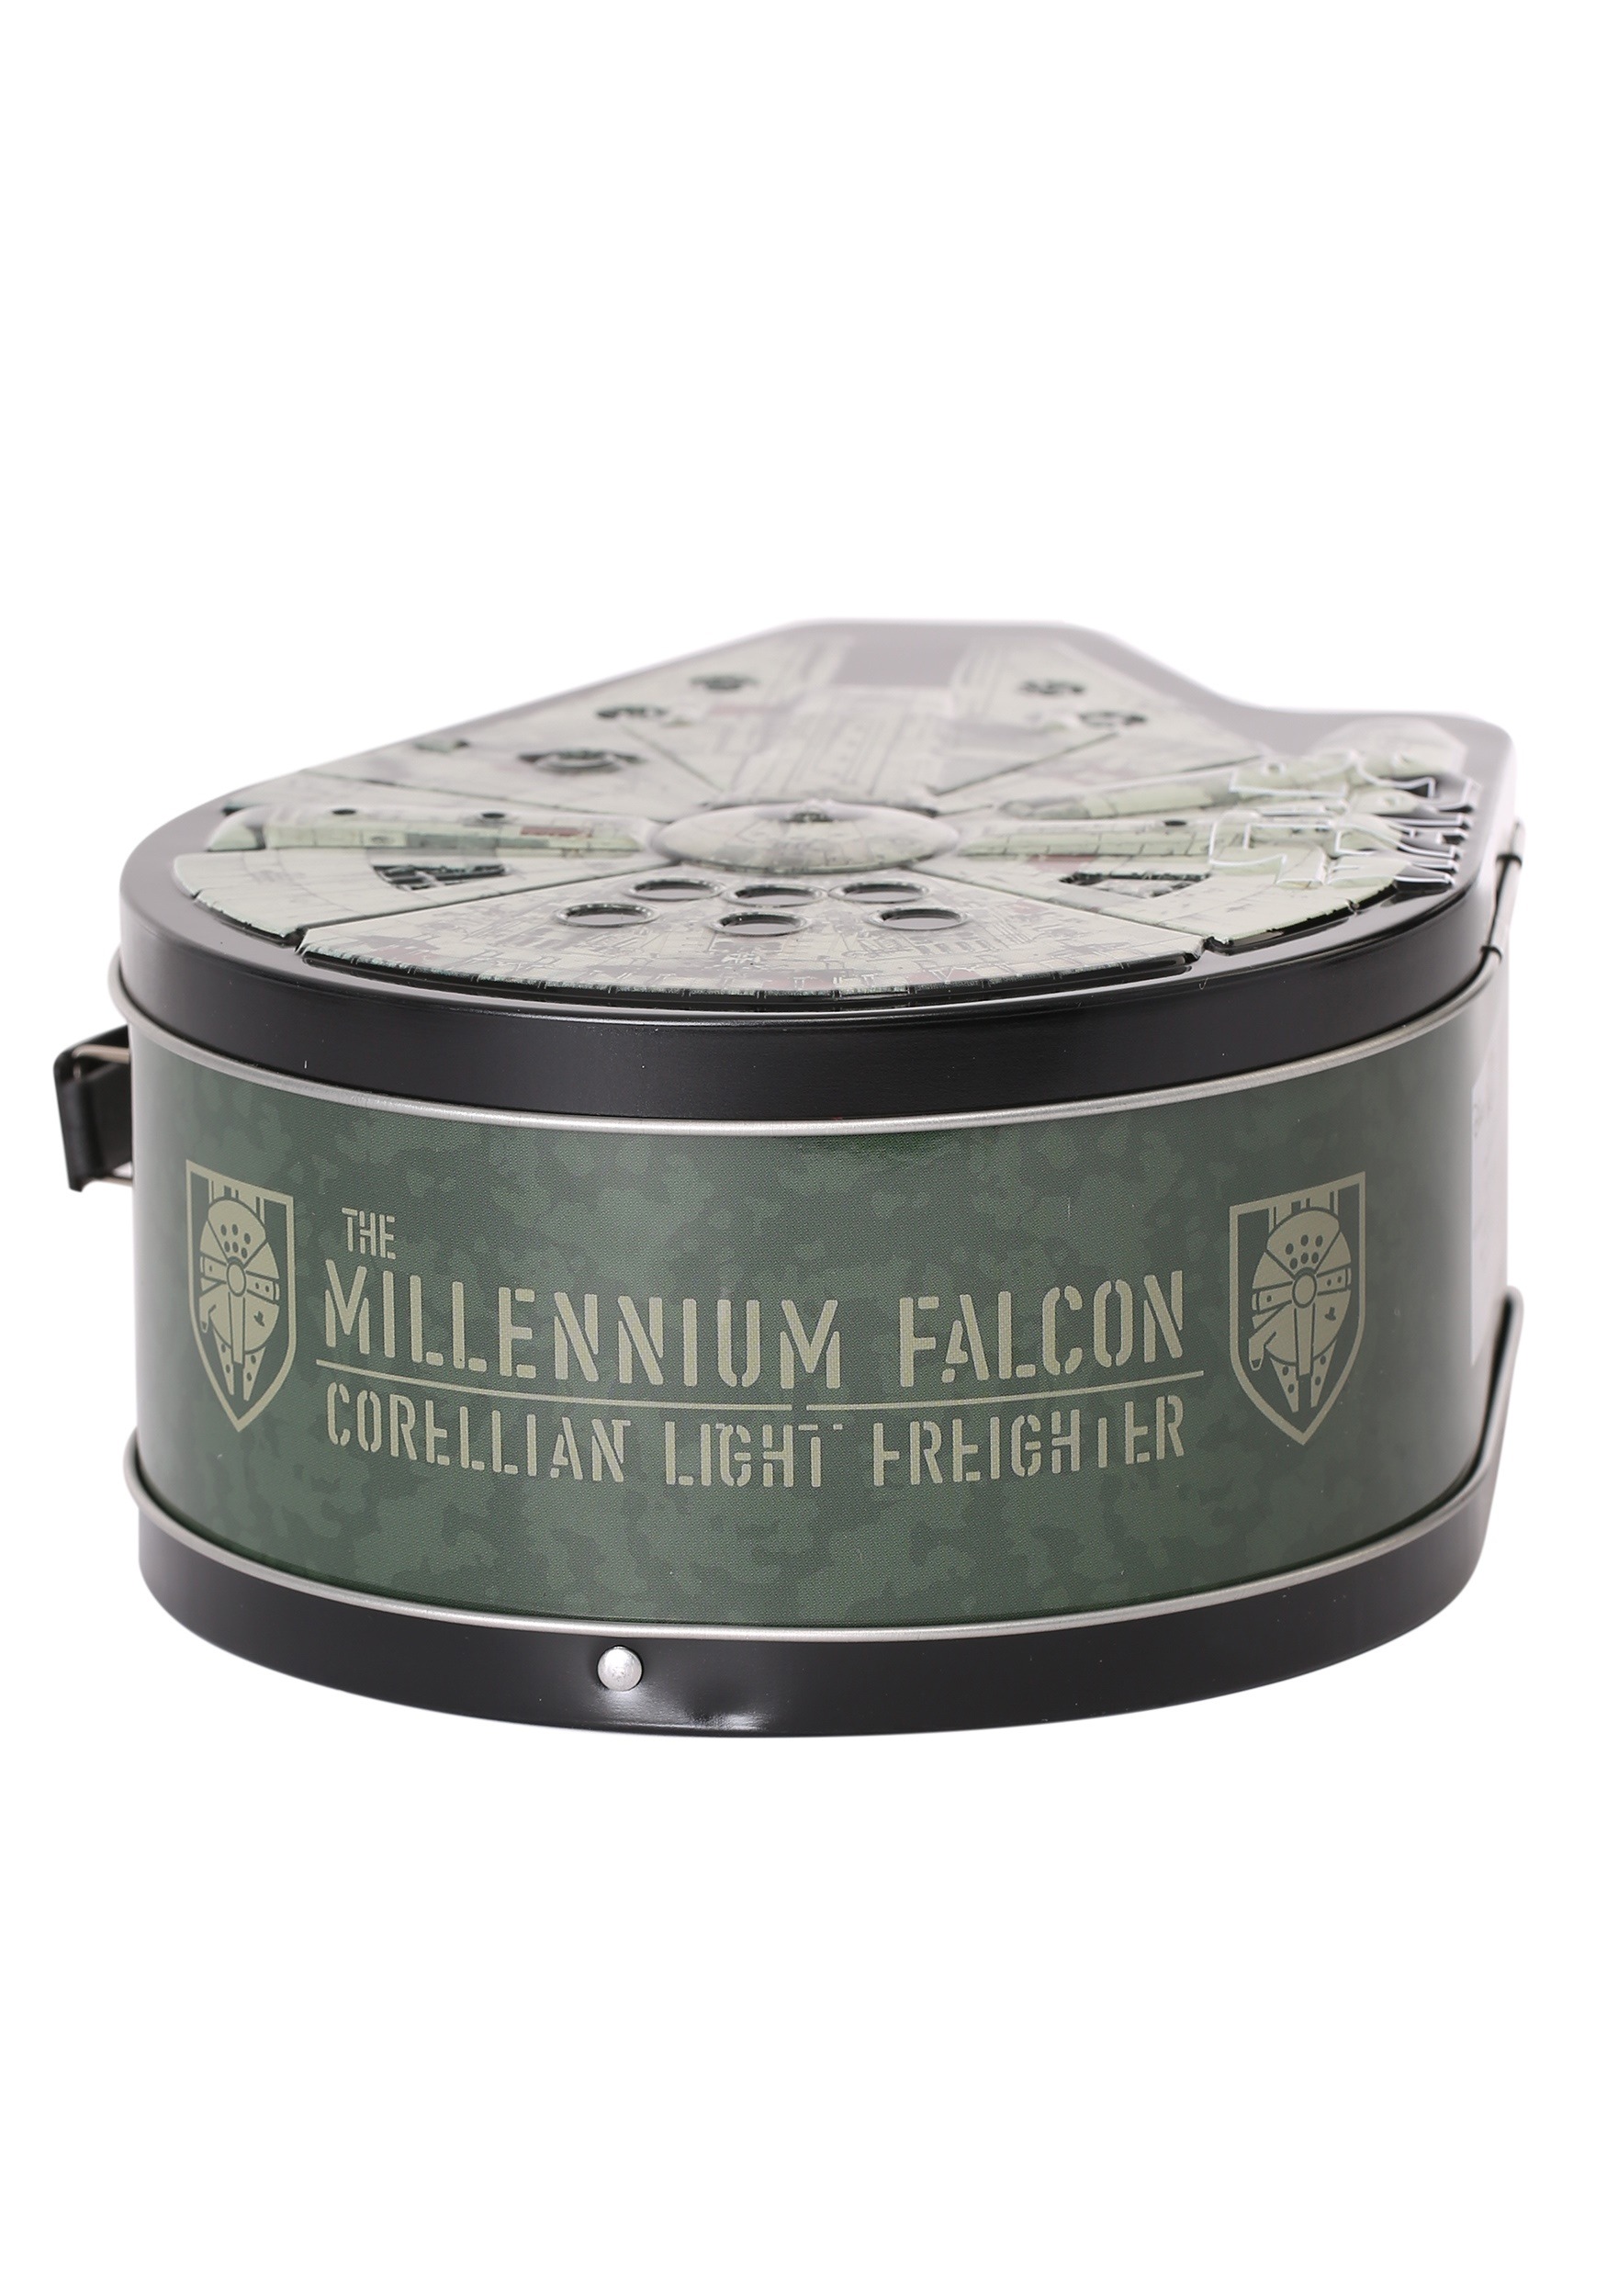 Millennium Falcon Star Wars Tin Lunch Box , Star Wars Lunch Box